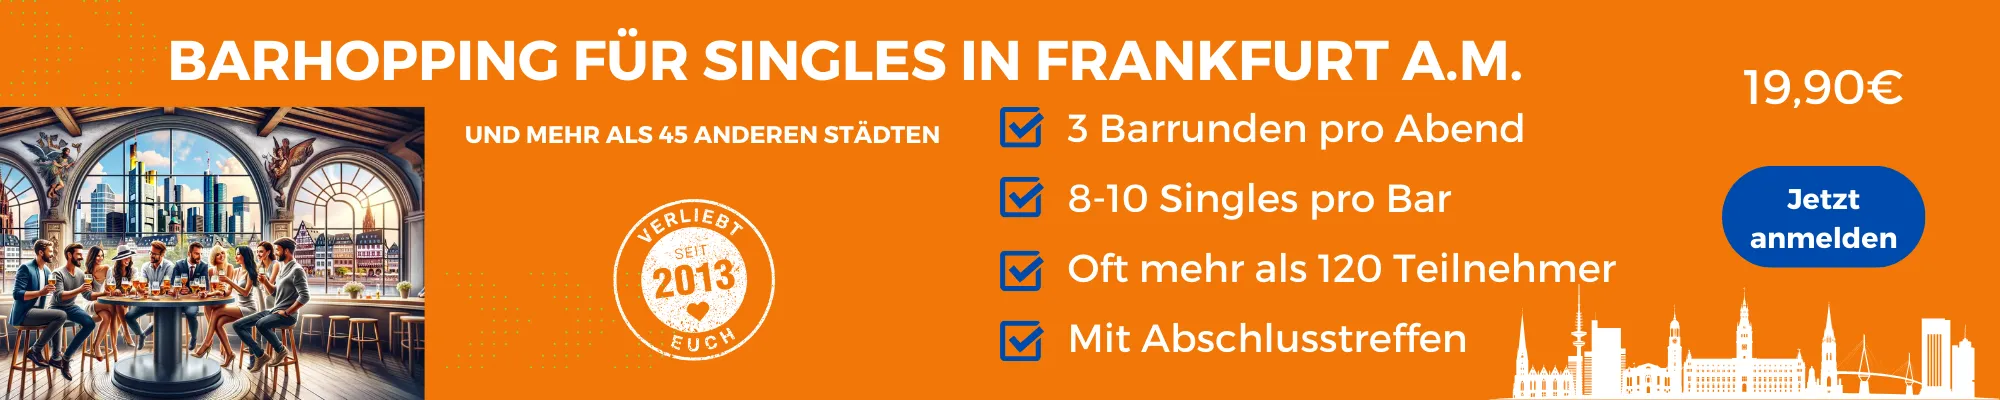 Face to Face Frankfurt: Barhopping für Singles in Frankfurt